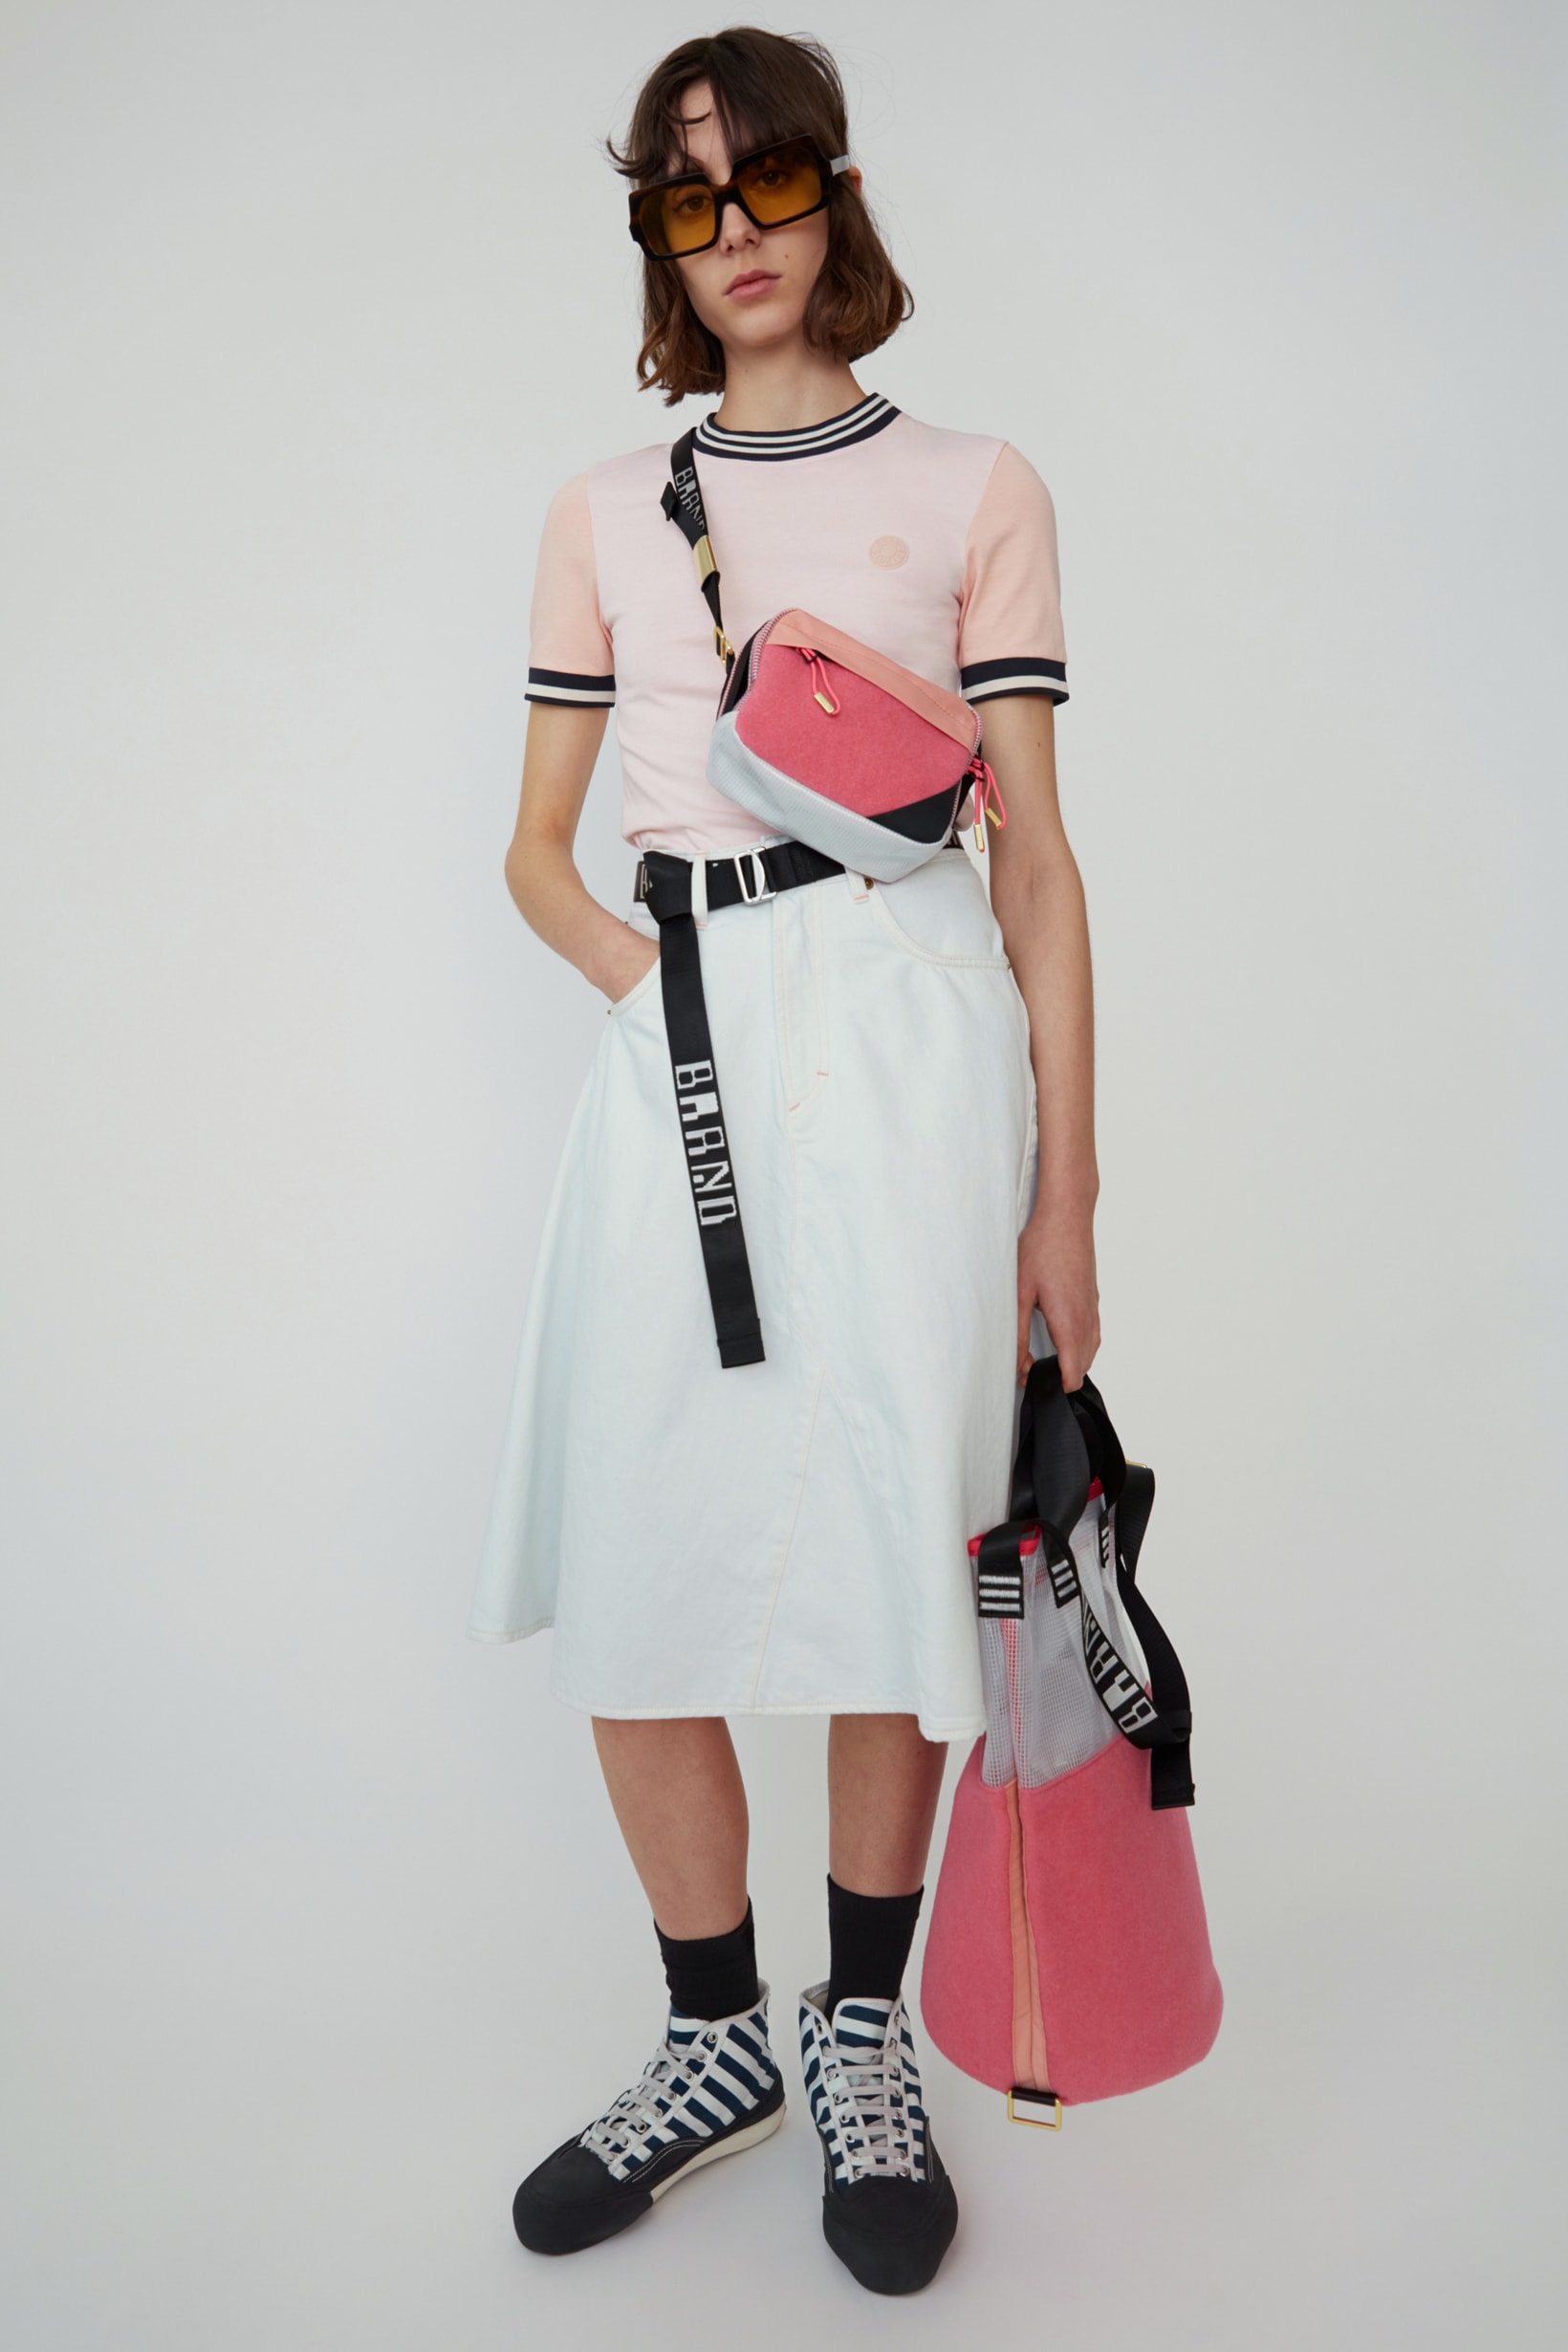 Acne Studios Spring Summer 2019 Denim Collection Shirt Pink Skirt Blue